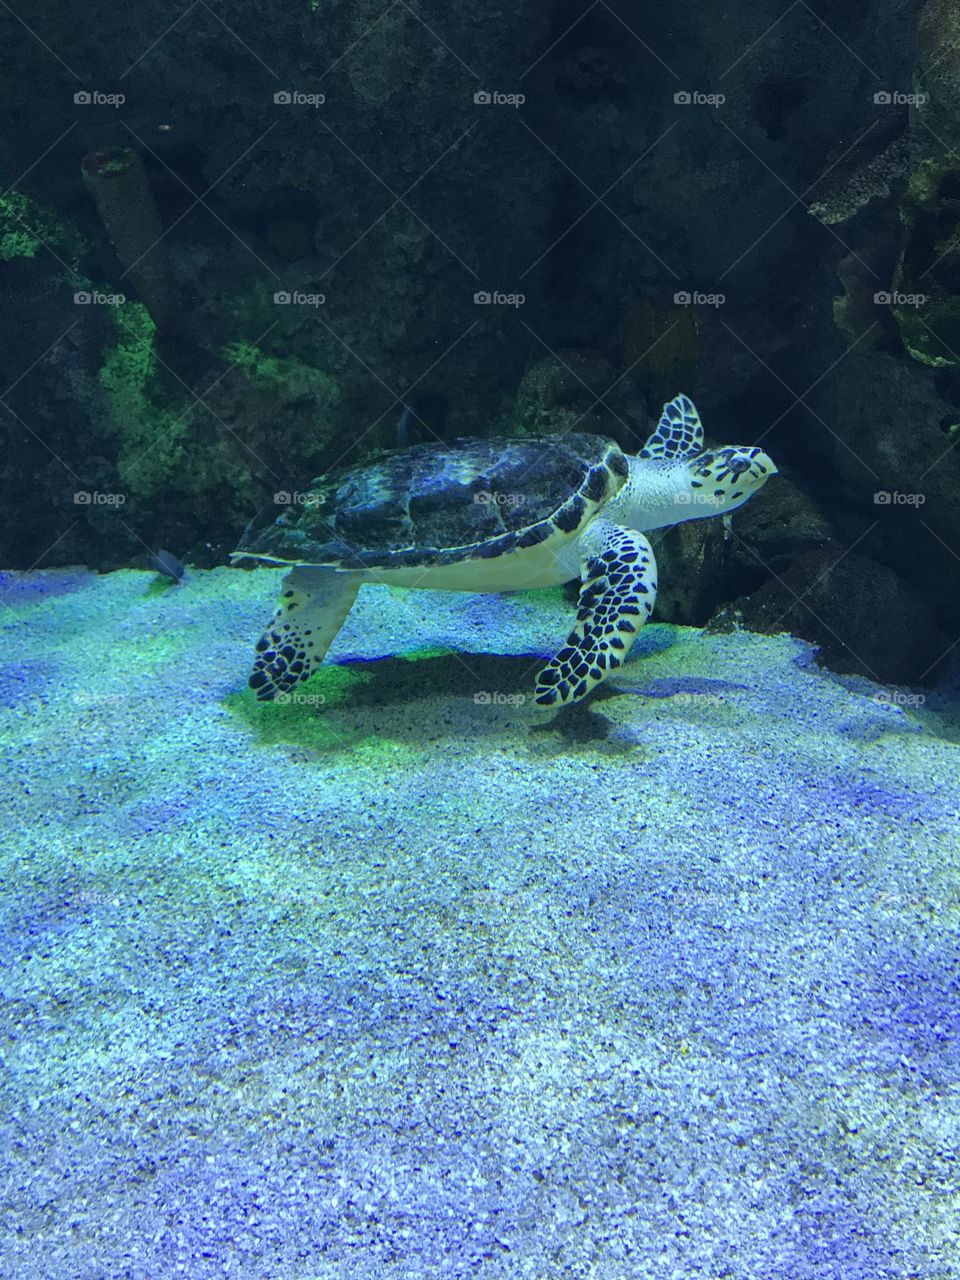 Turtle swimming in the tank